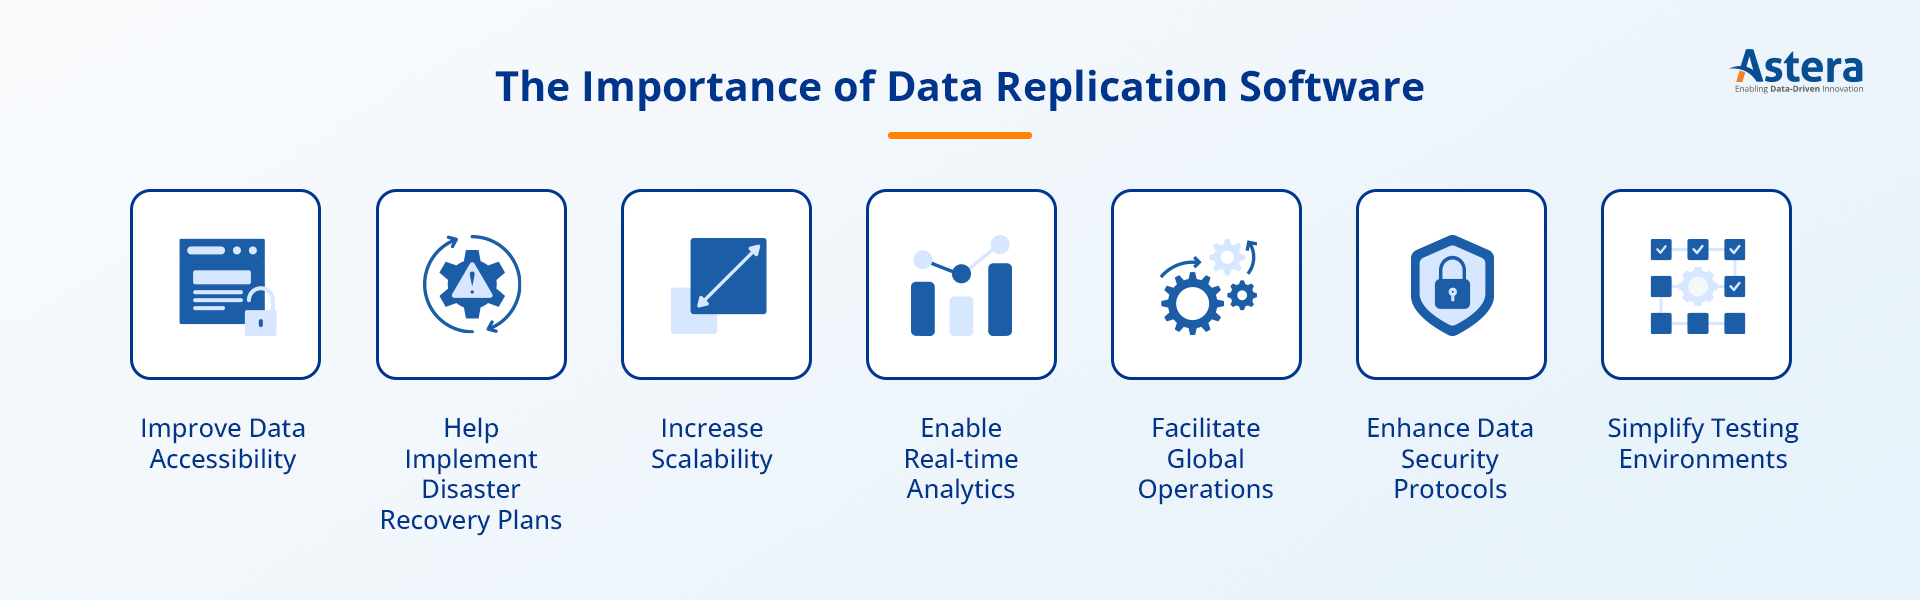 Benefits of data replication software.